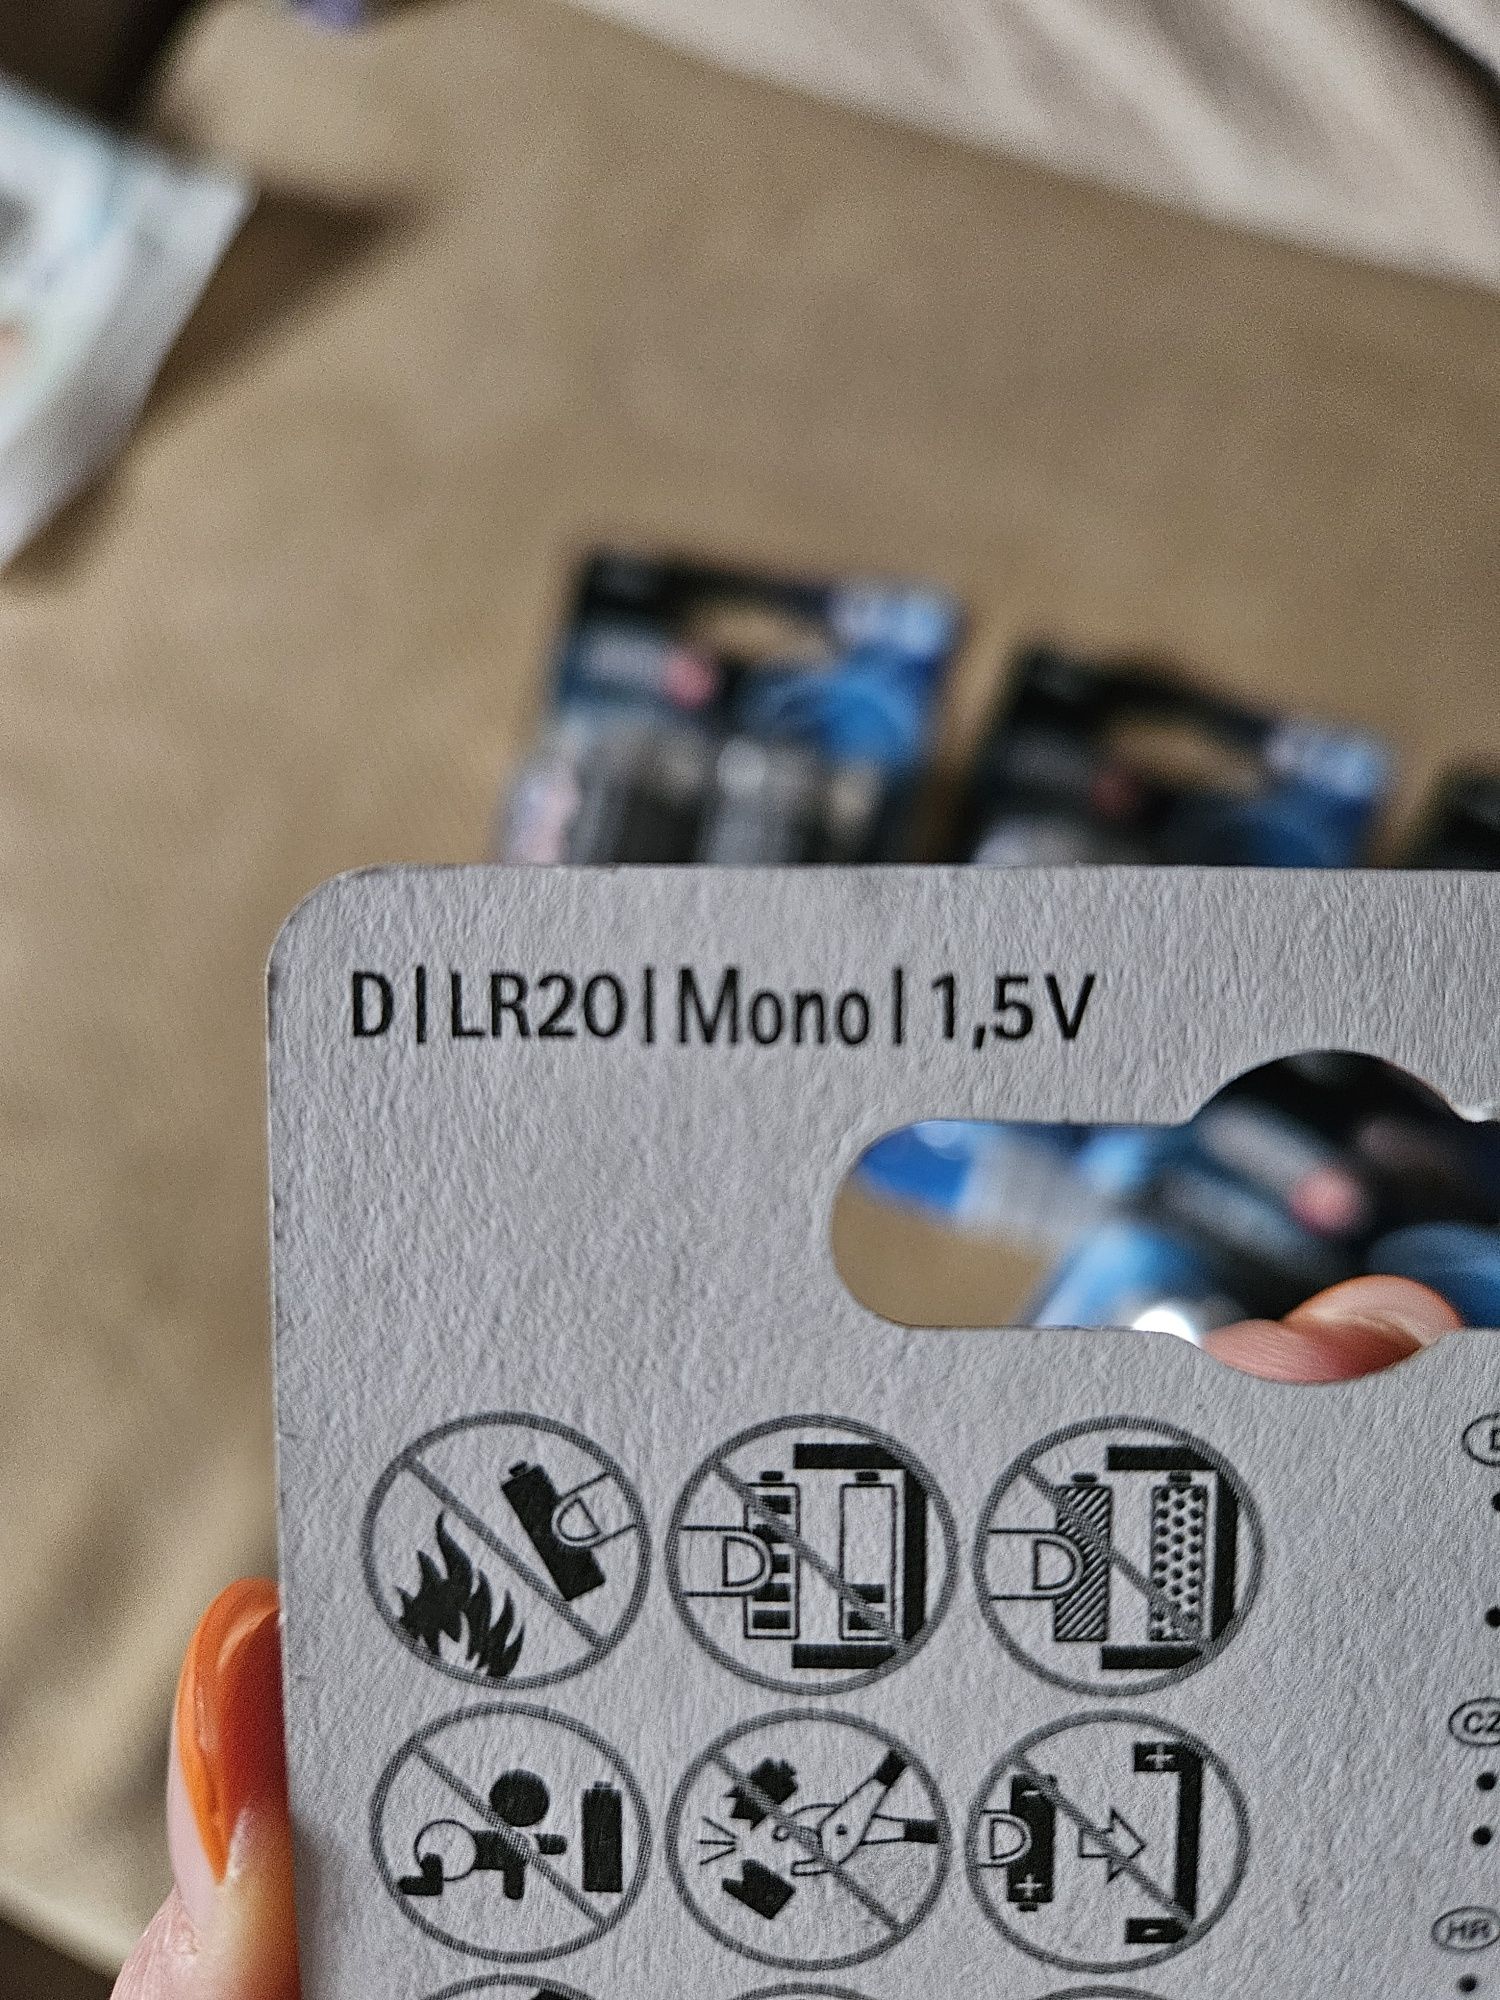 Baterie alkaiczne D | LR20 | Mono | 1,5V